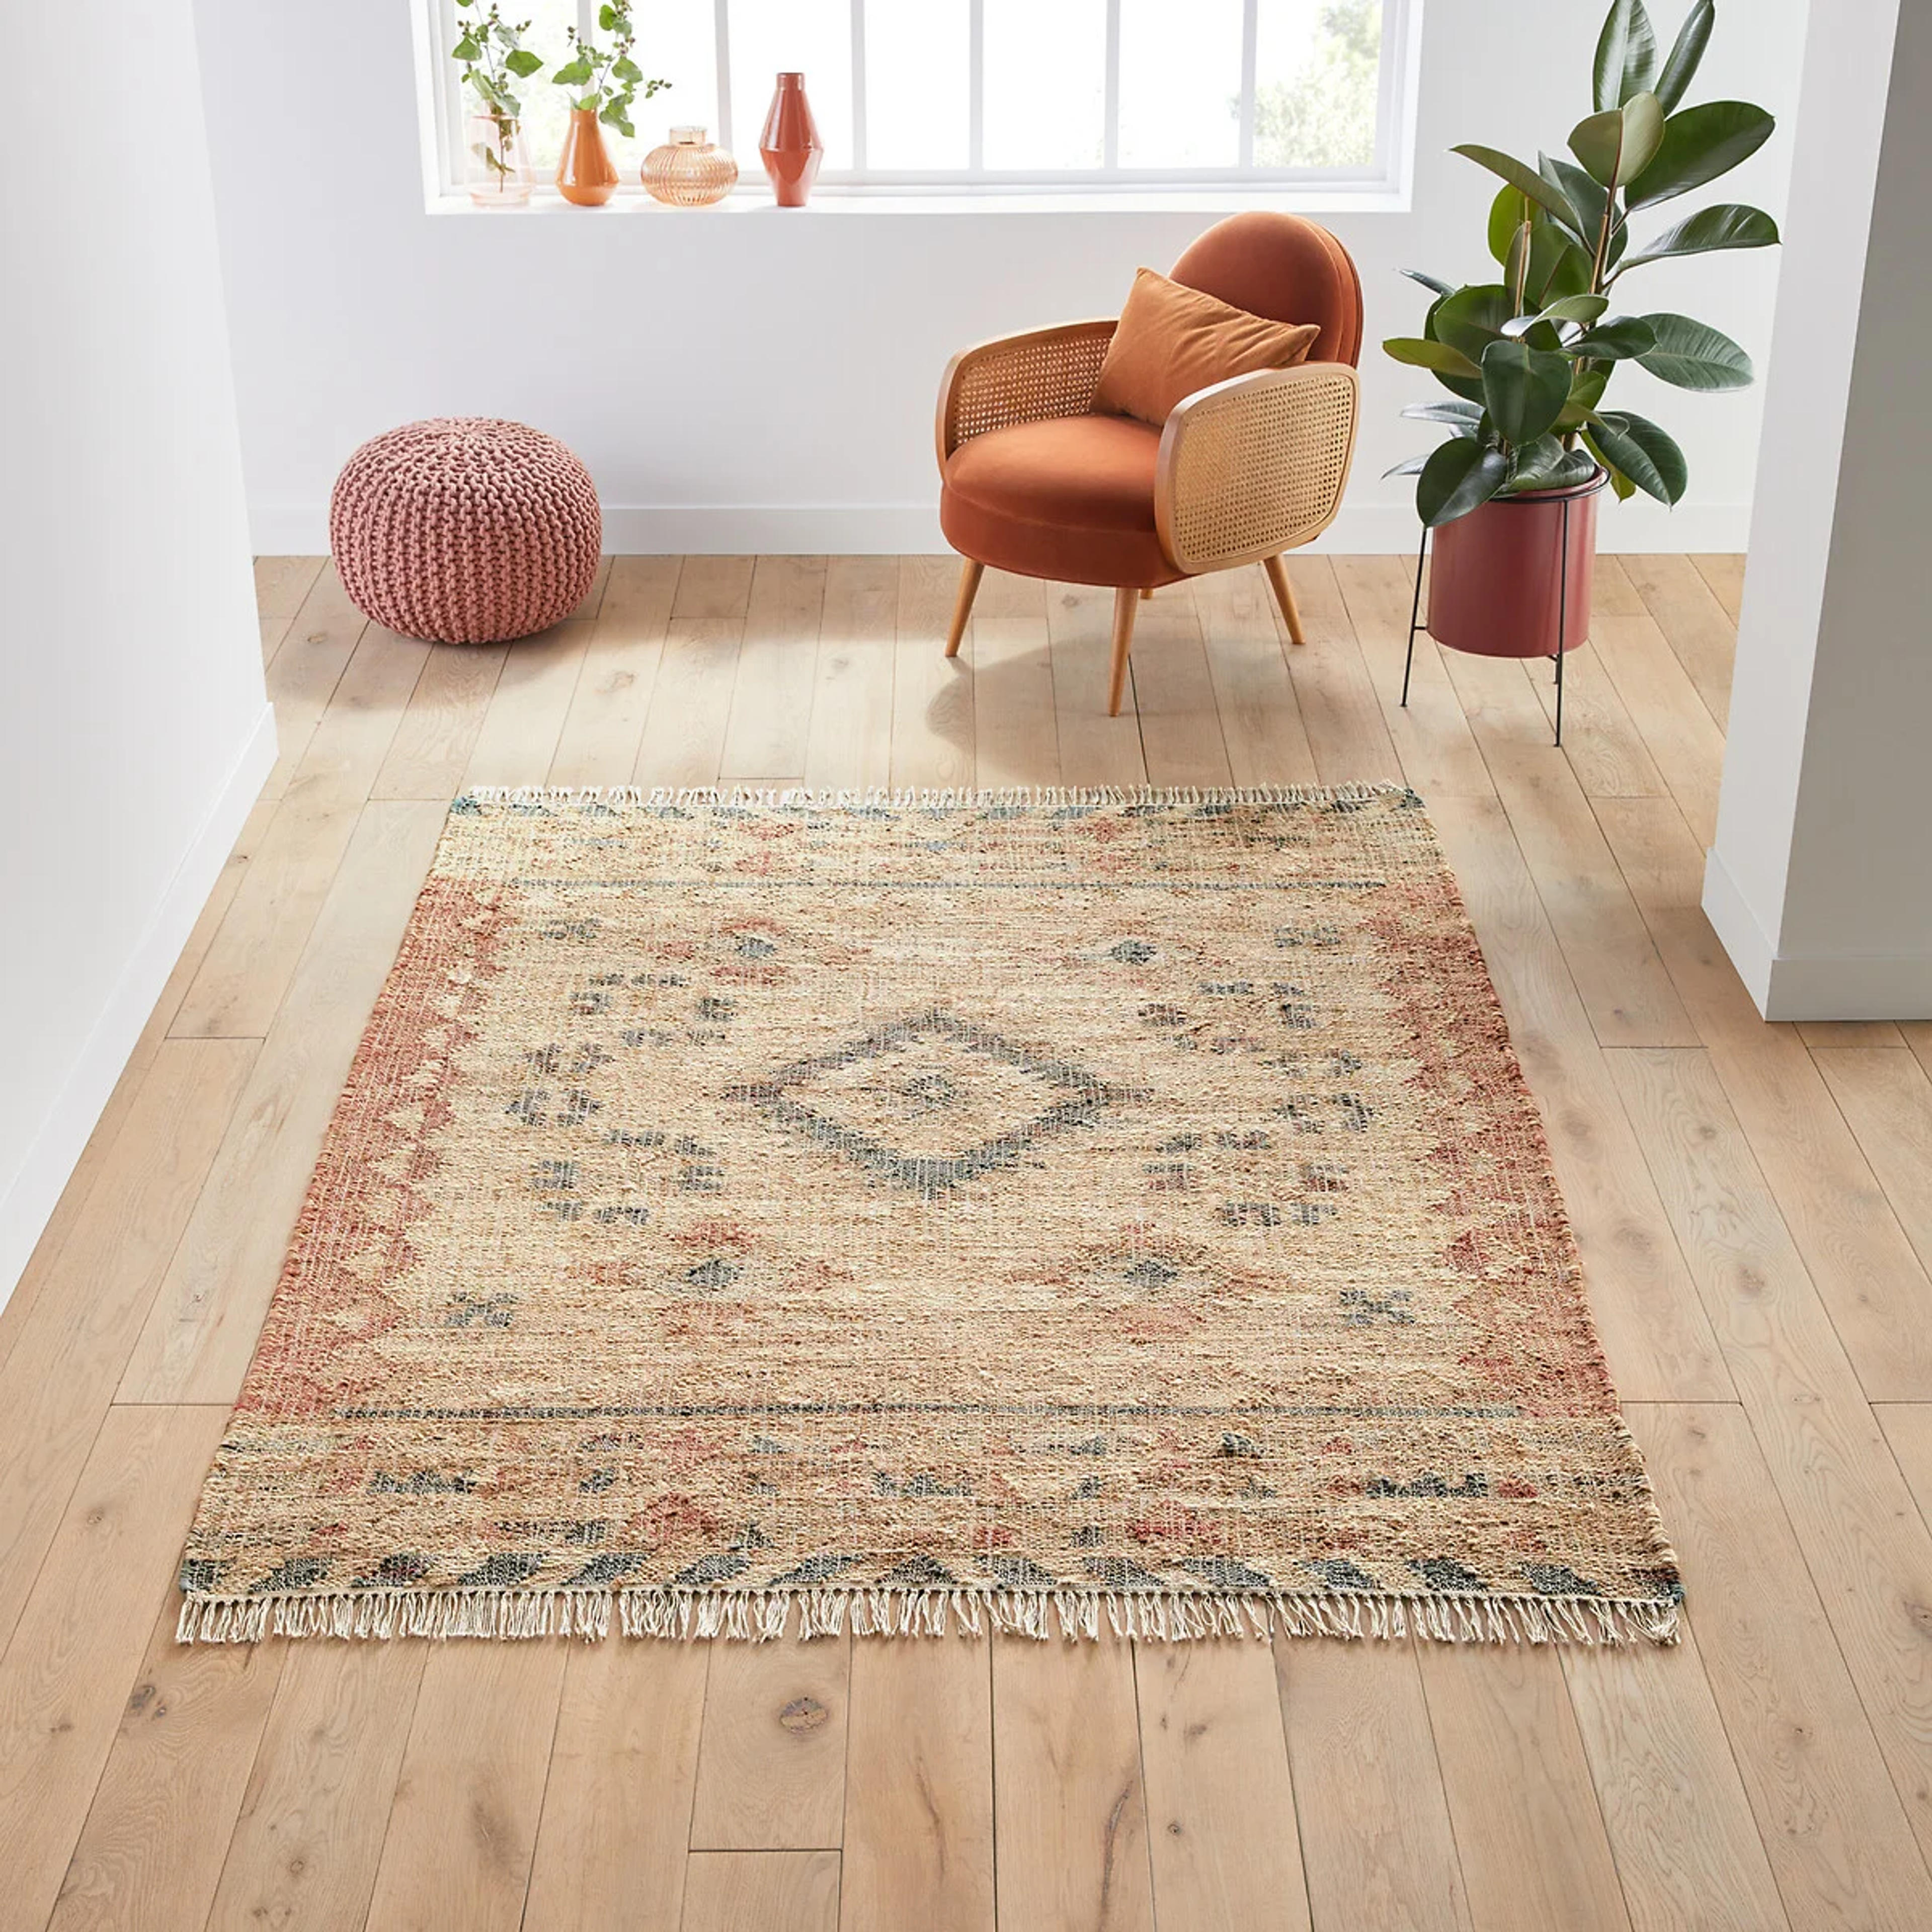 Navaja aged effect kilim jute cotton rug, multi-coloured, La Redoute Interieurs | La Redoute